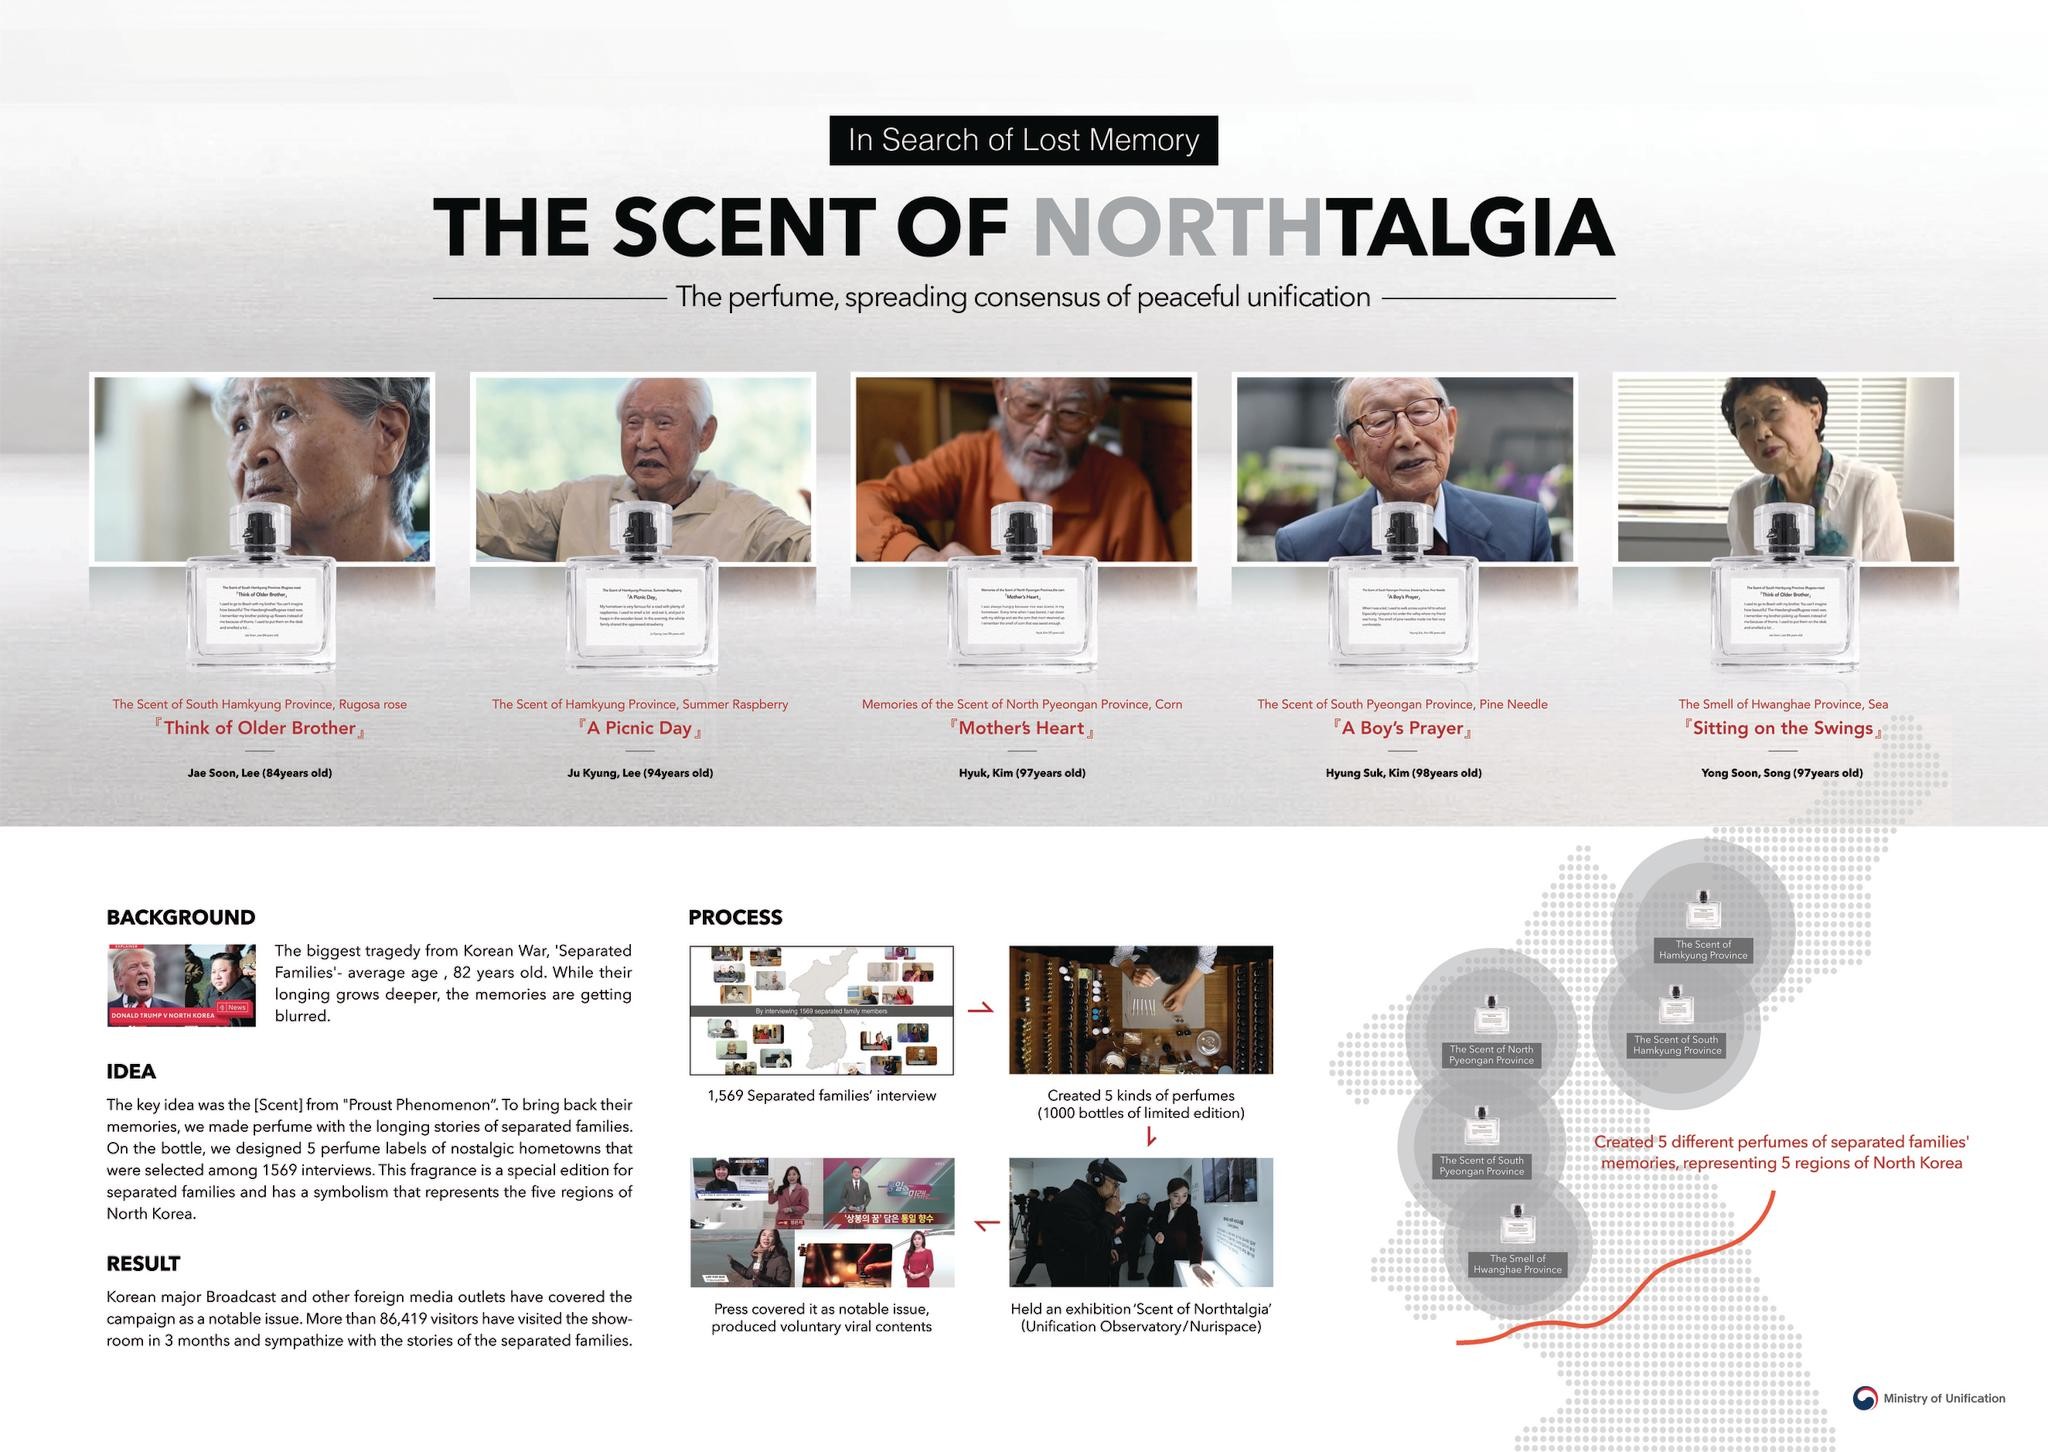 THE SCENT OF NORTHTALGIA